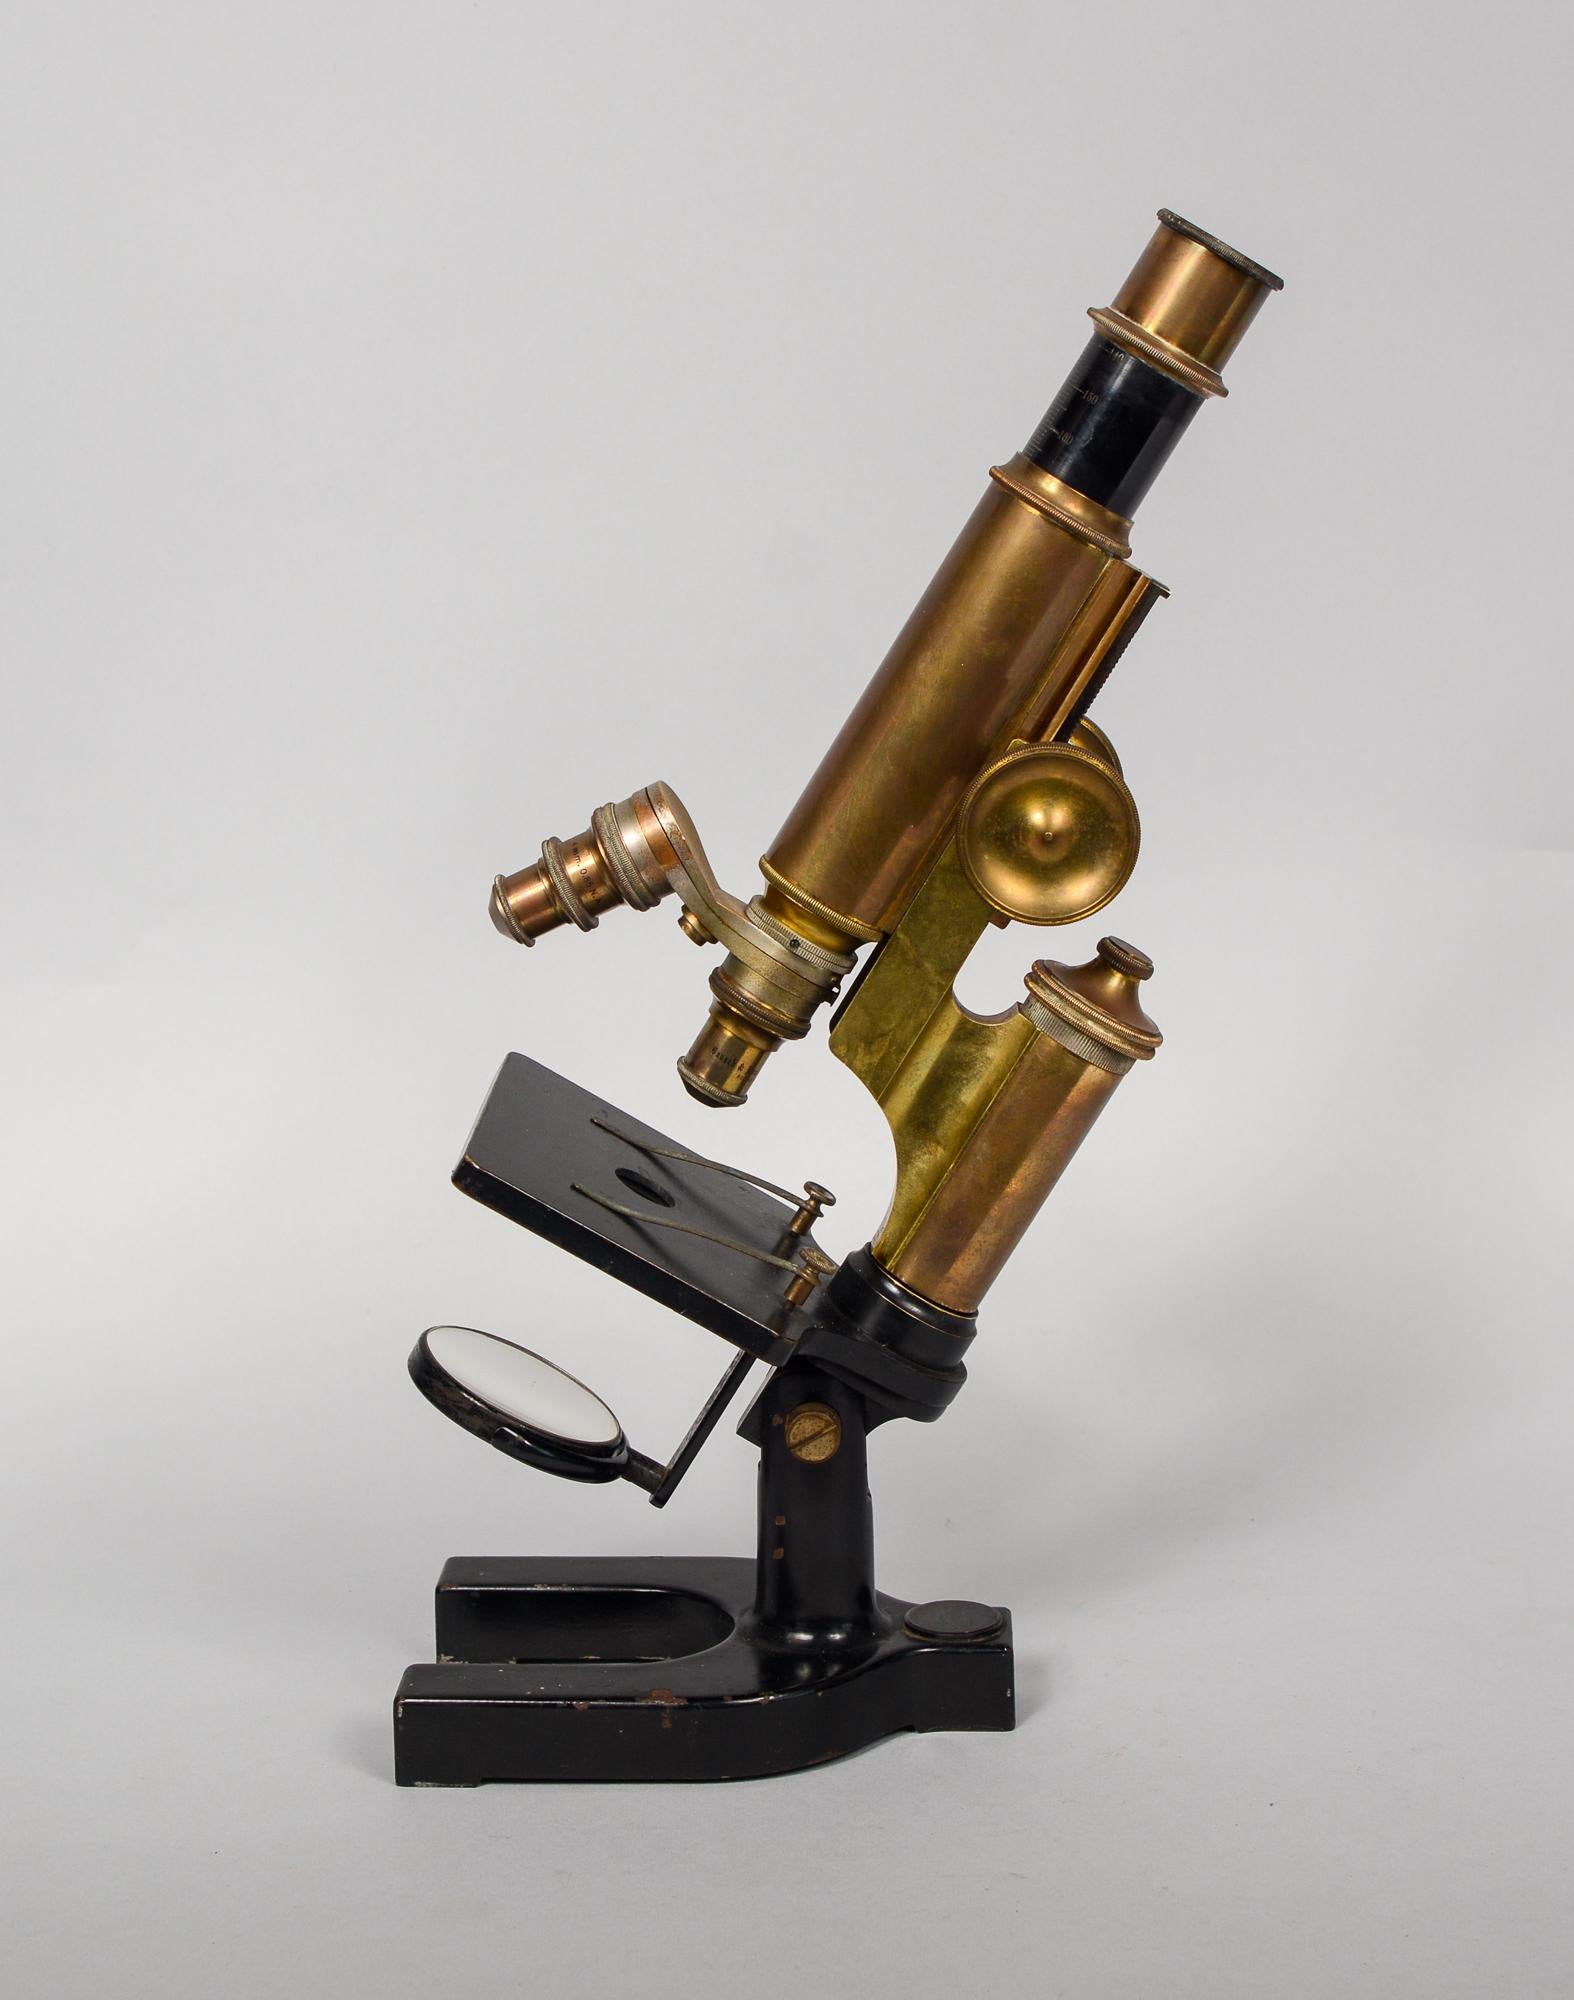 20th century microscope